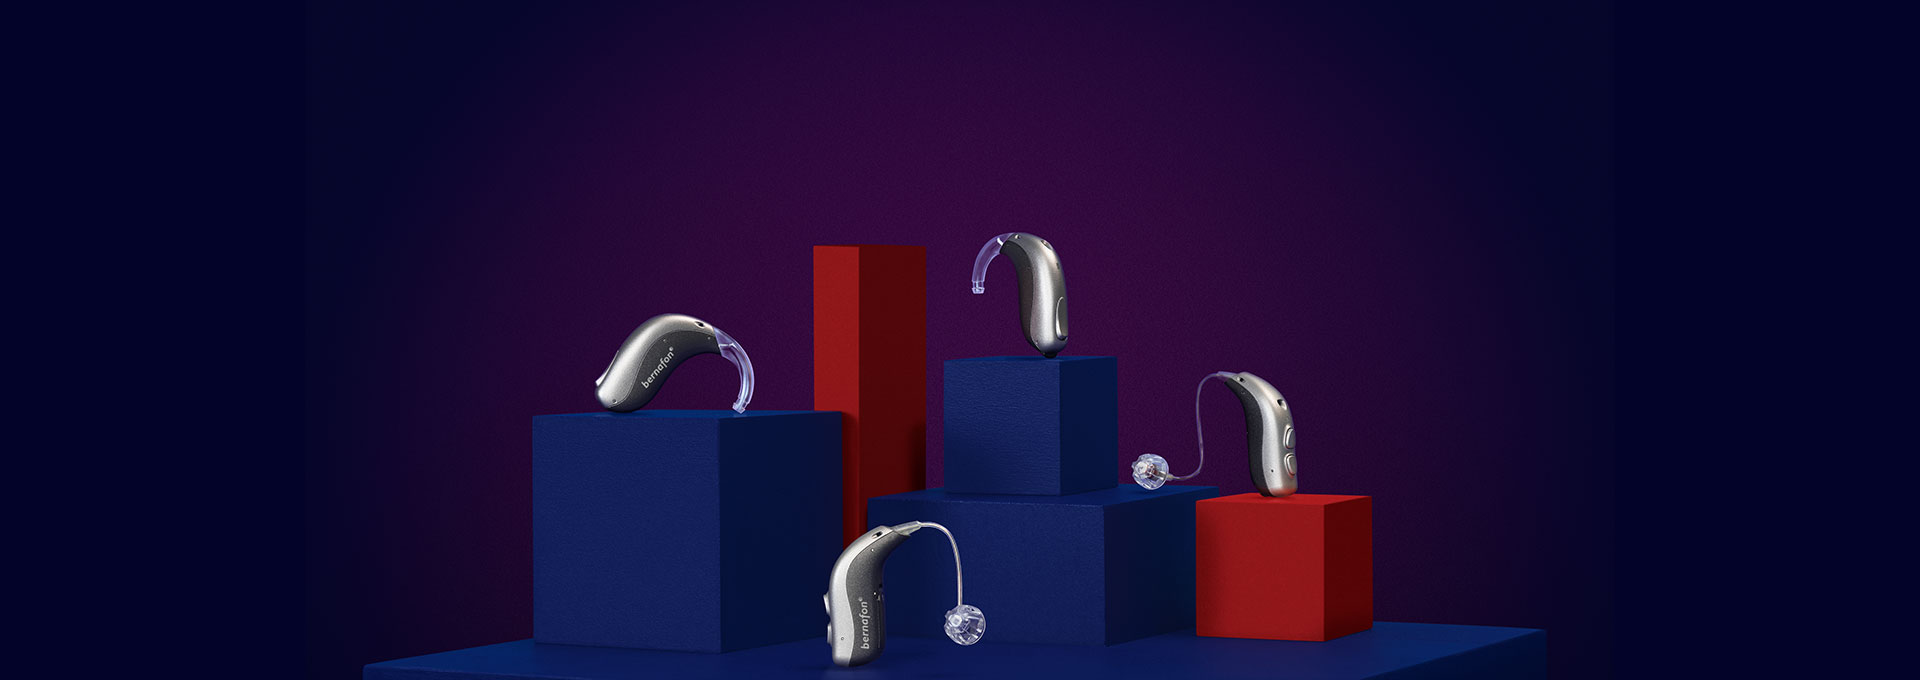 4 Bernafon Alpha Hörgeräte (miniBTE T R, miniRITE T R, miniBTE T, miniRITE T) auf roten & blauen Würfeln mit lila Hintergrund